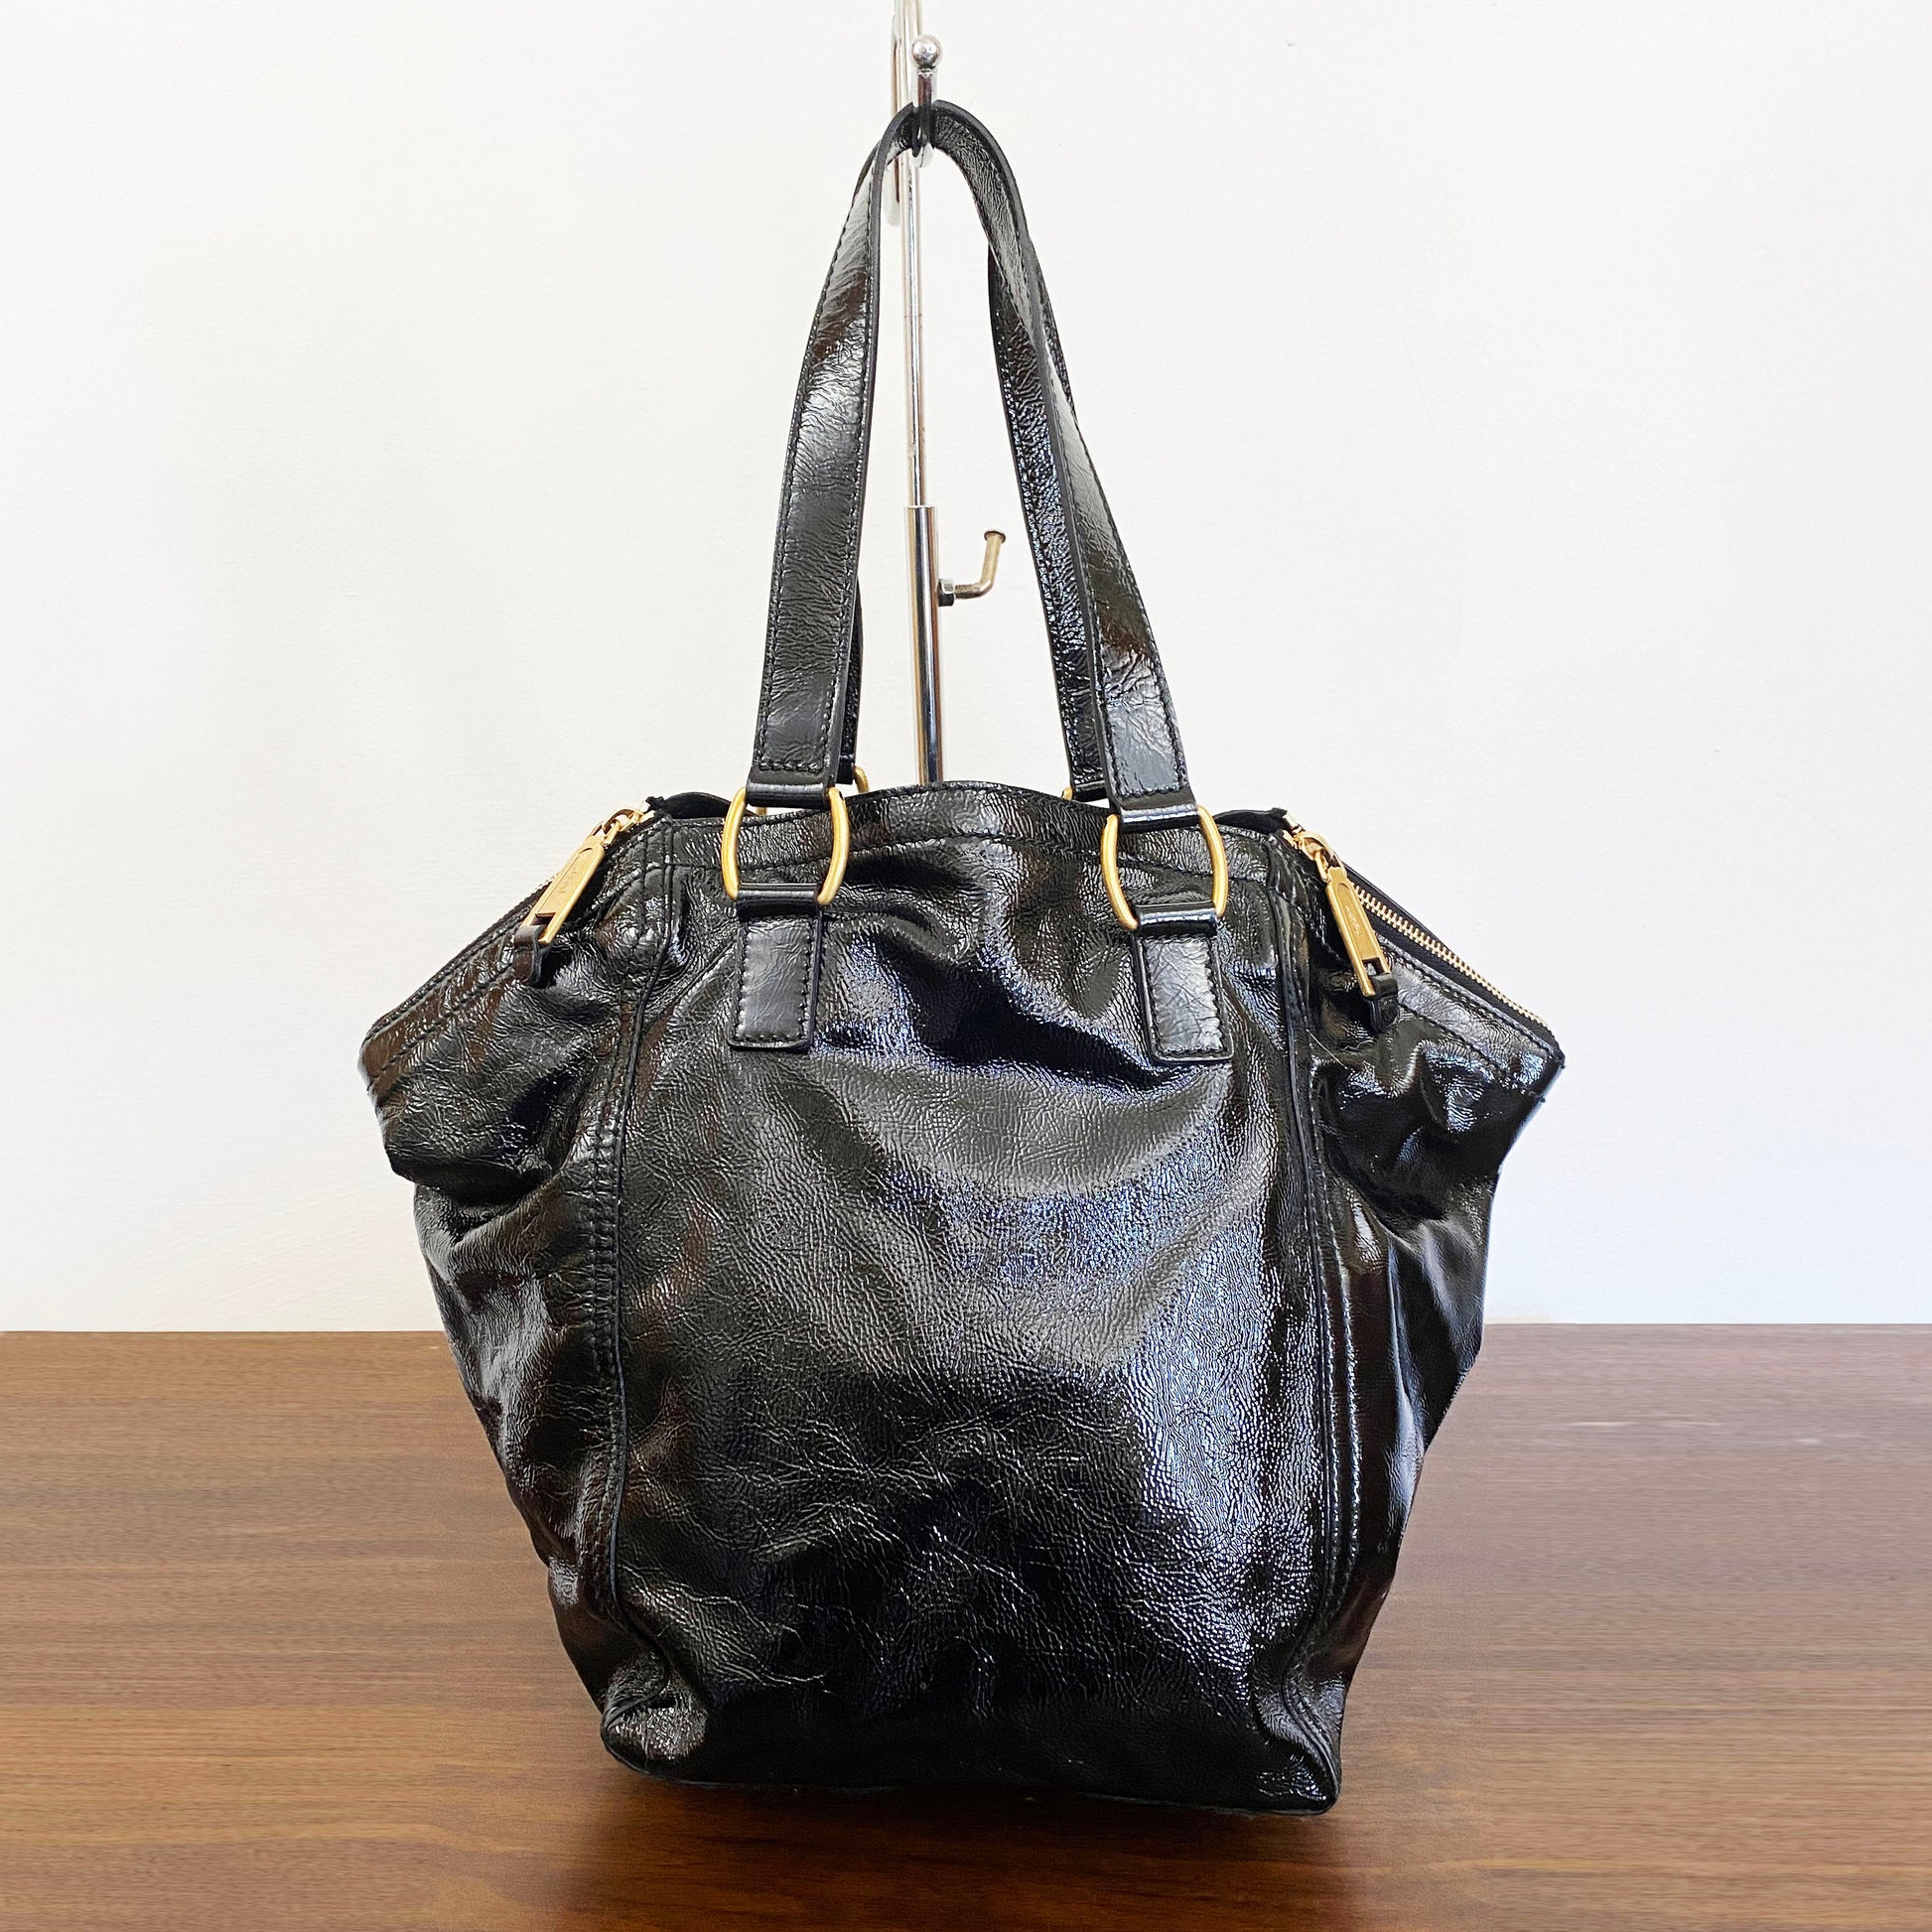 Downtown patent leather handbag Yves Saint Laurent Black in Patent